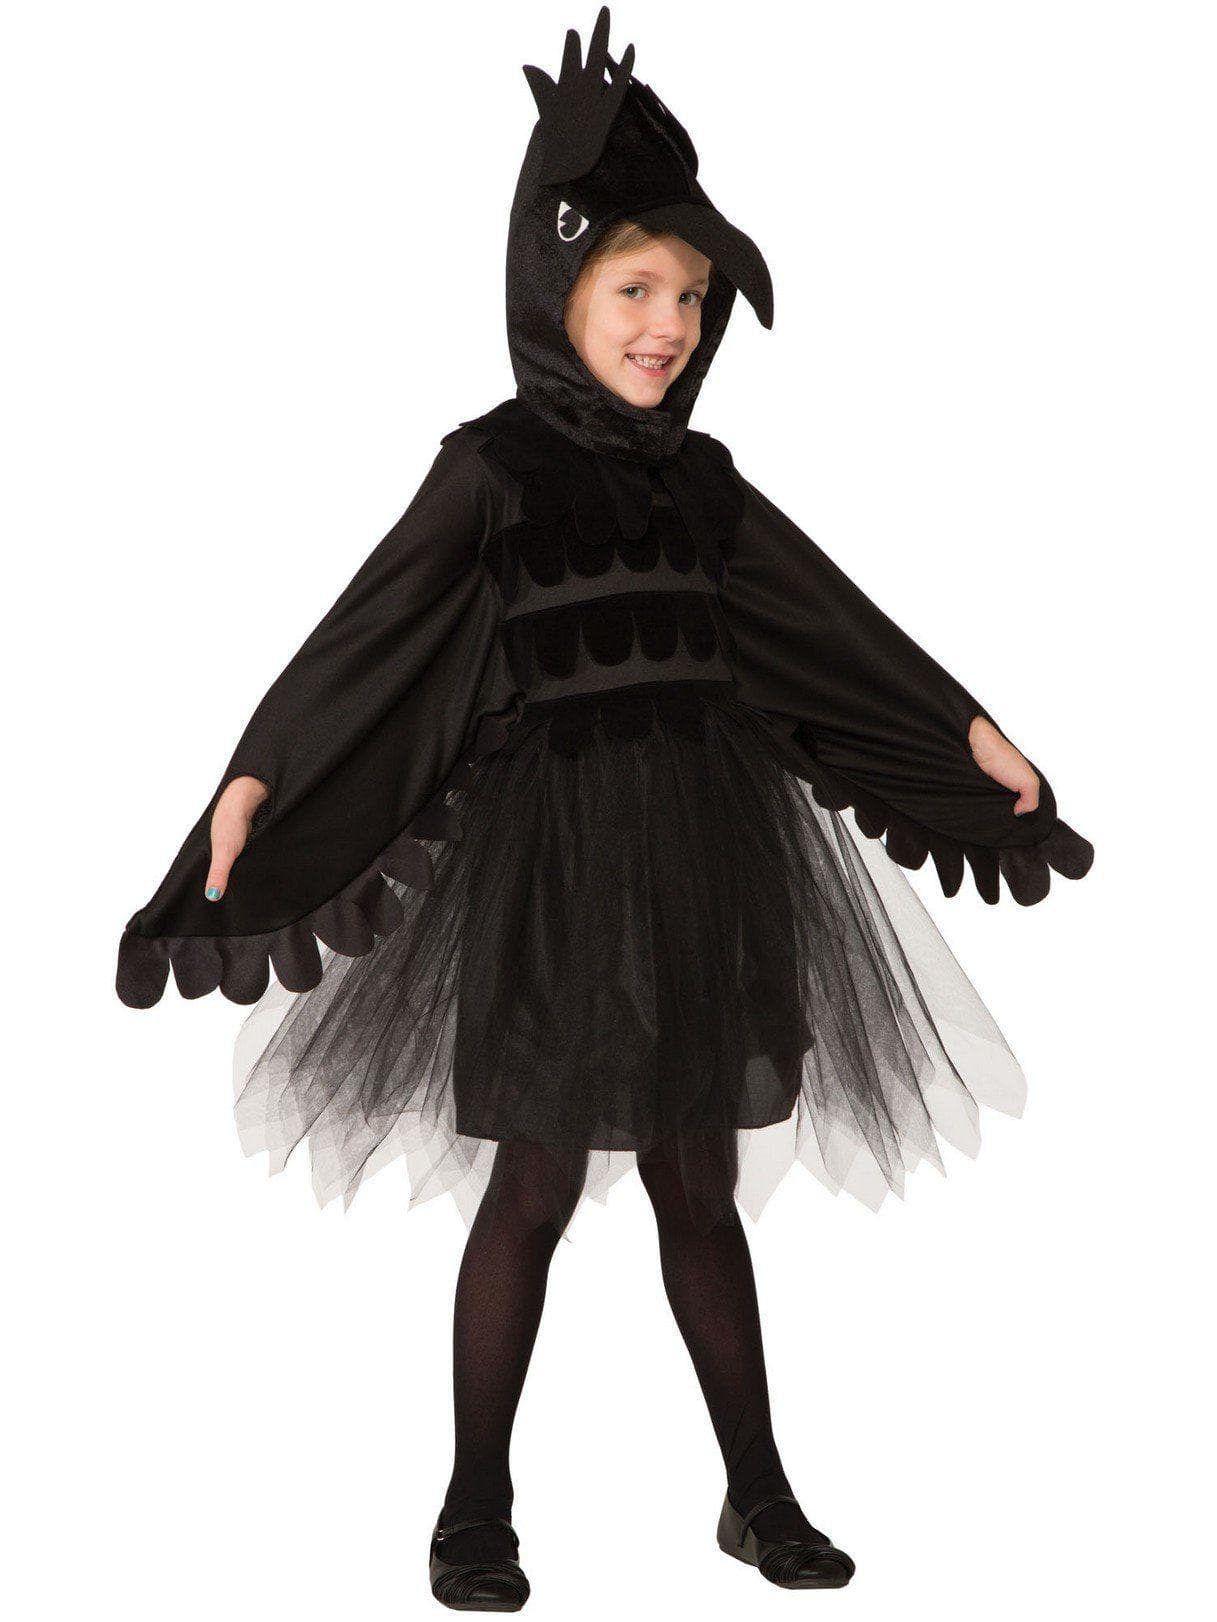 Kid's Raven Costume - costumes.com